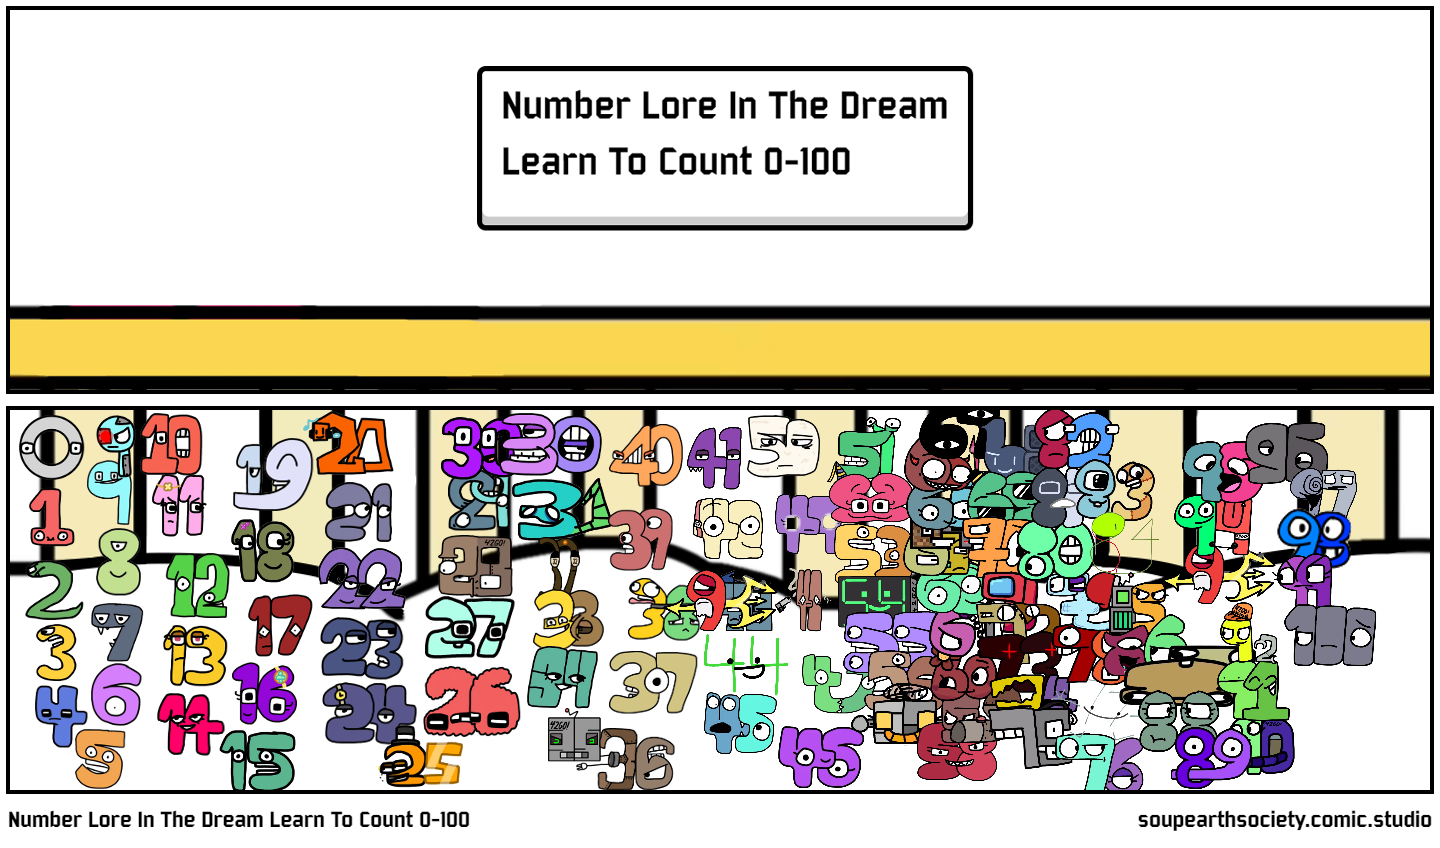 Number lore - Comic Studio